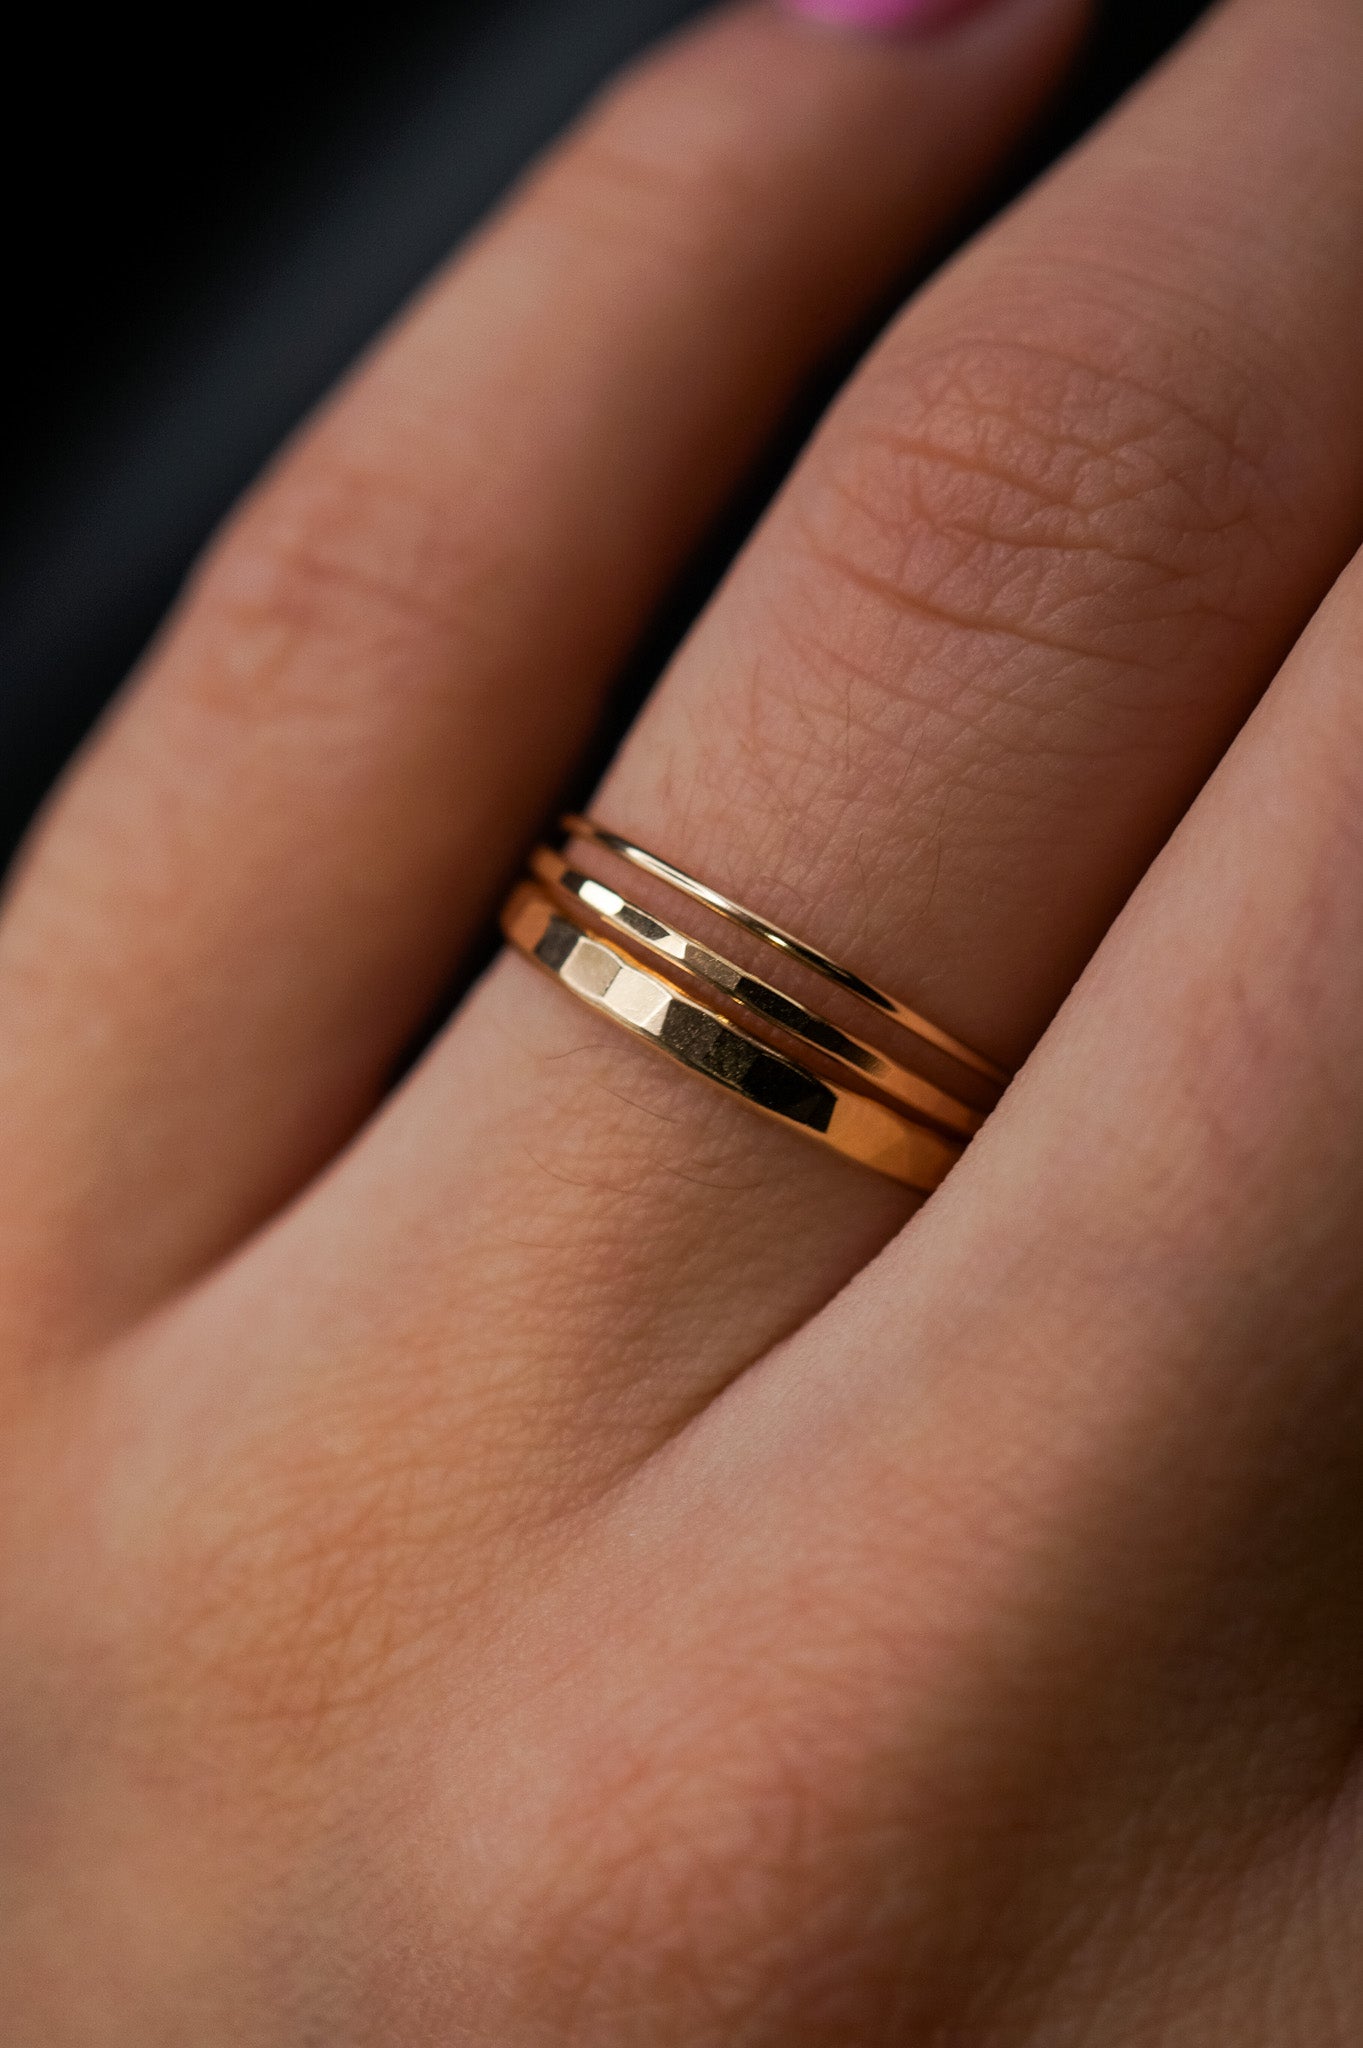 Stacking Ring Sets – Hannah Naomi Jewelry